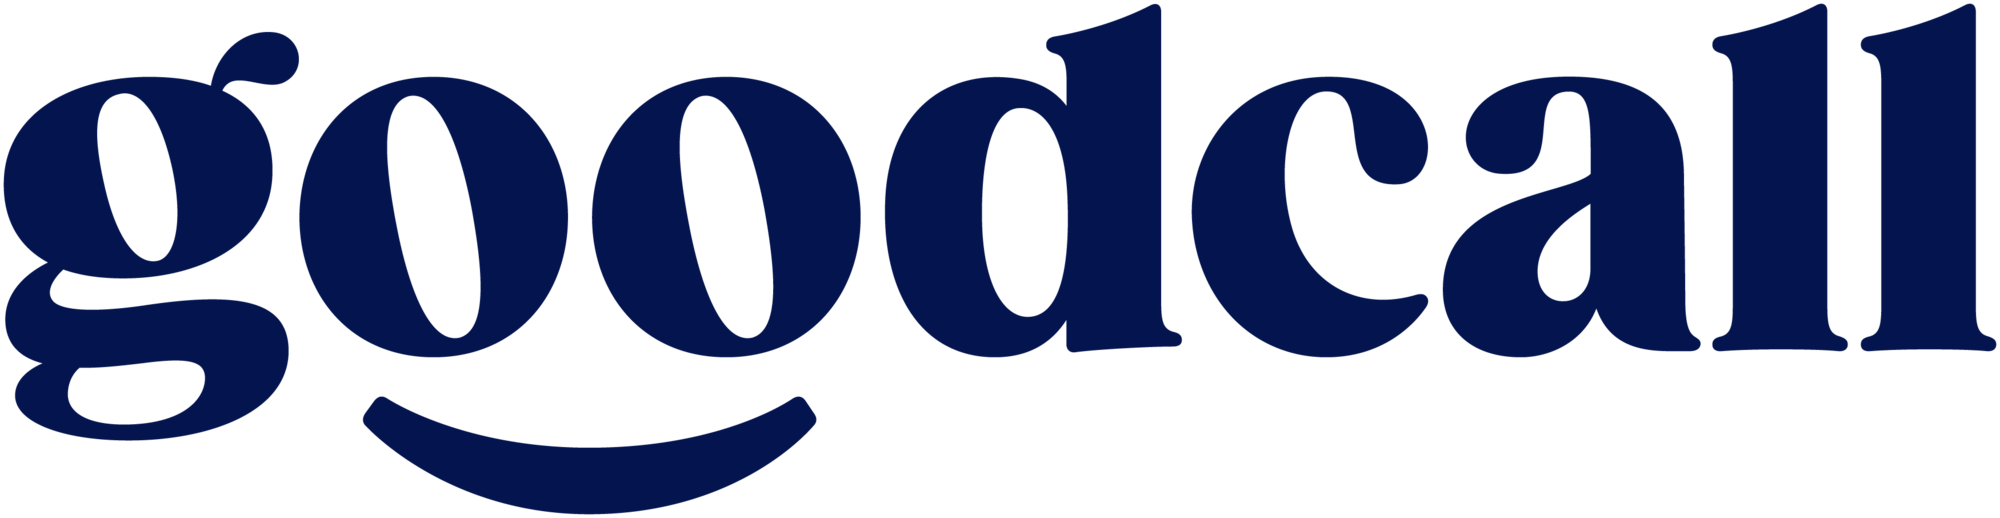 Goodcall logo